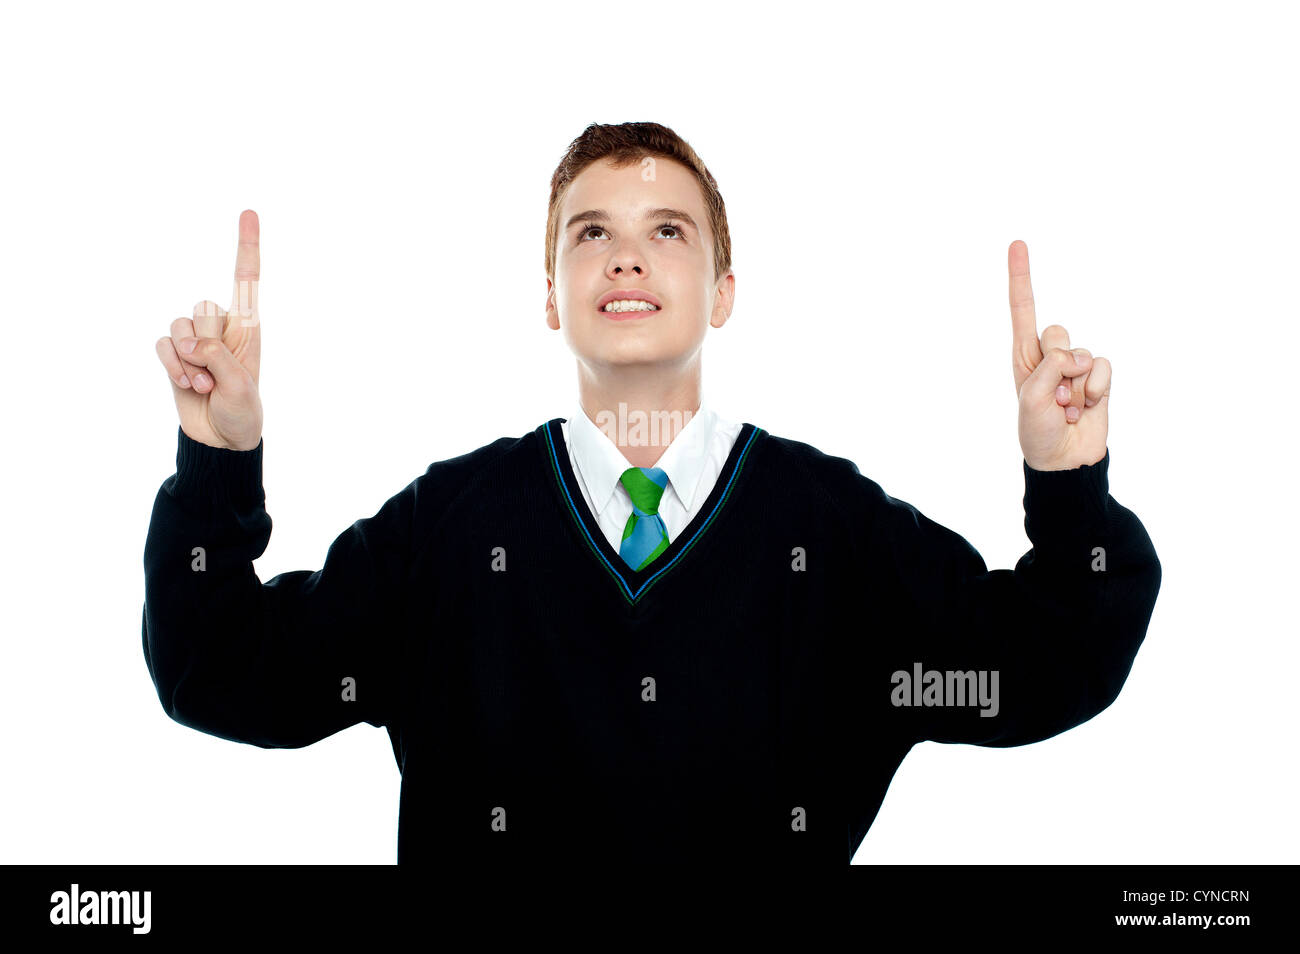 Smiling school kid indicating upwards wearing uniform Stock Photo